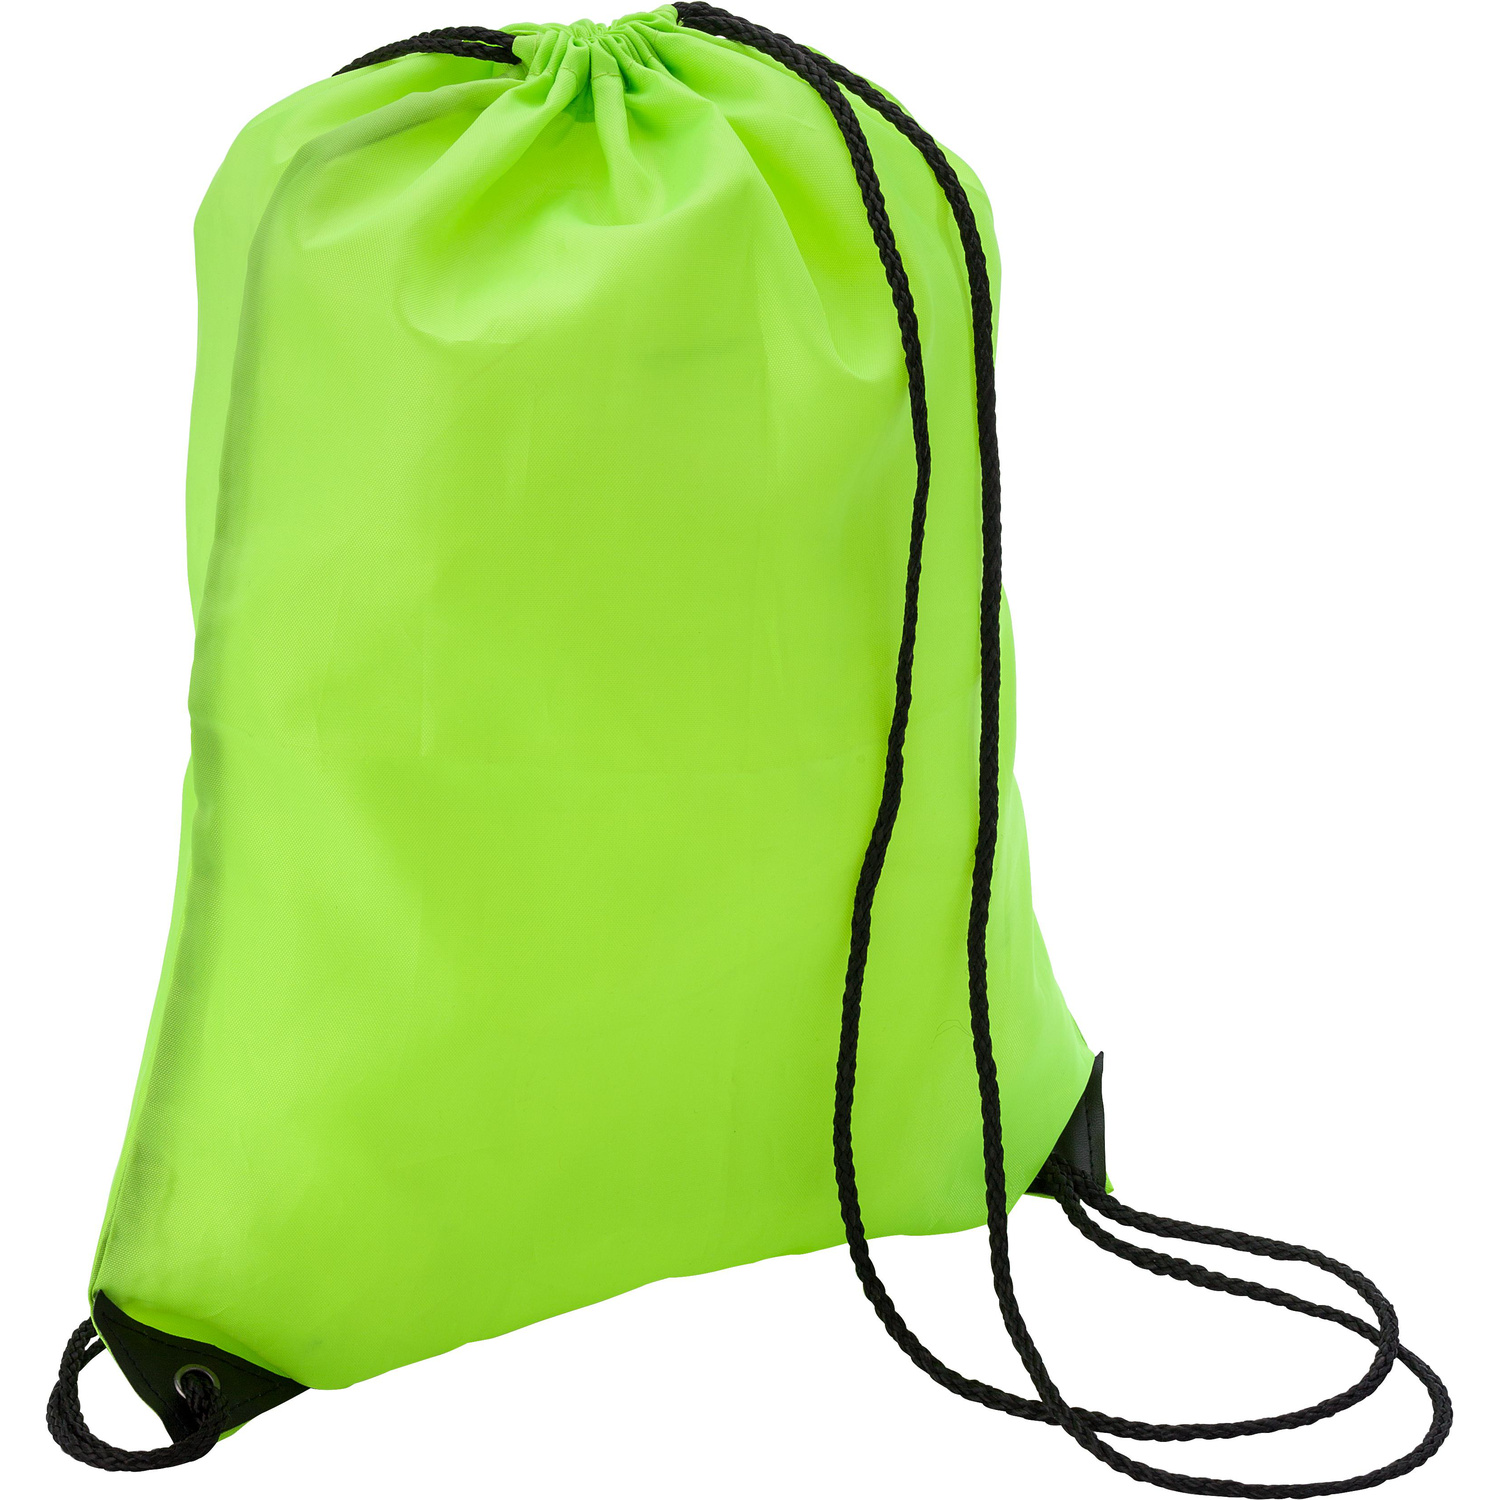 007097 019999999 3d090 frt pro01 fal - Drawstring backpack